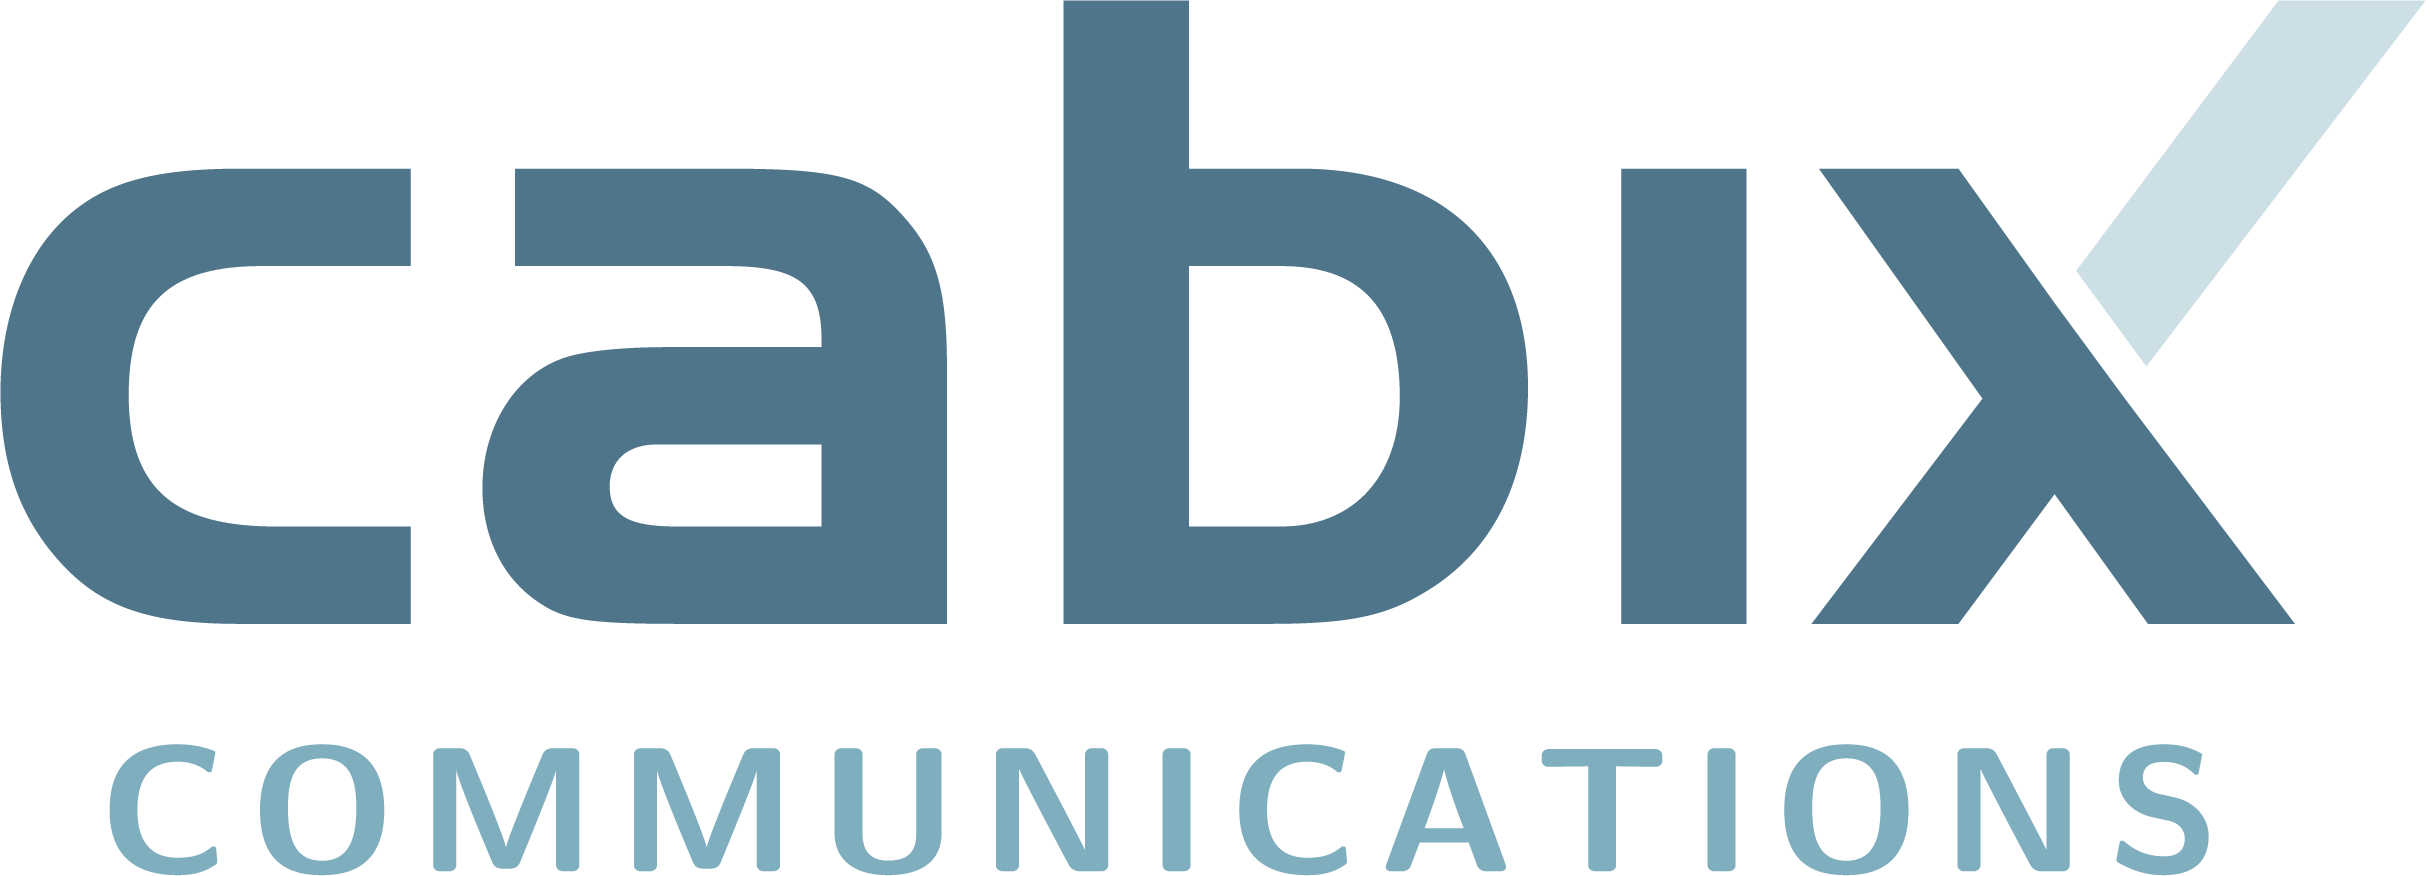 Cabix Communications